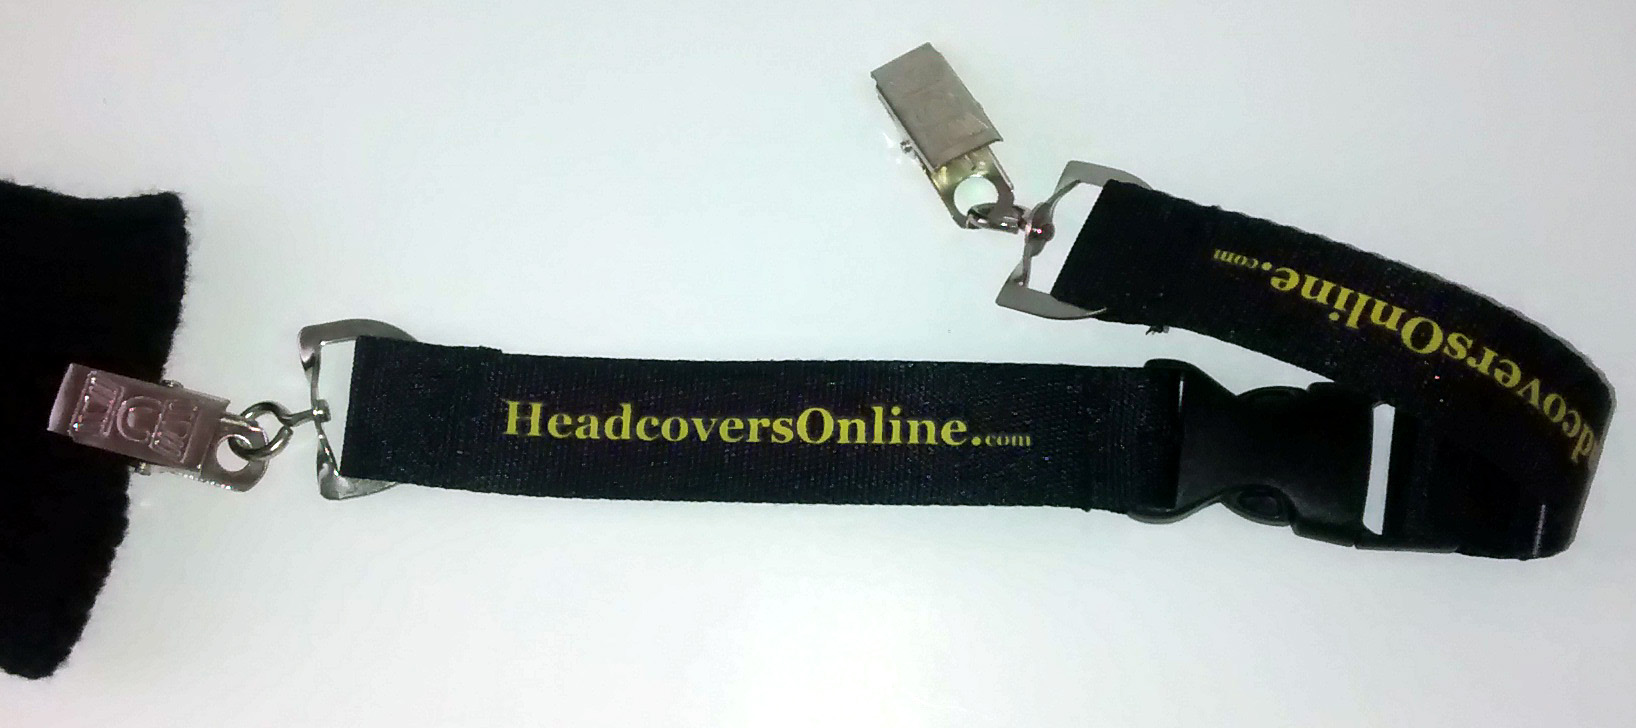 The TetherGuard HeadcoversOnline.com Edition